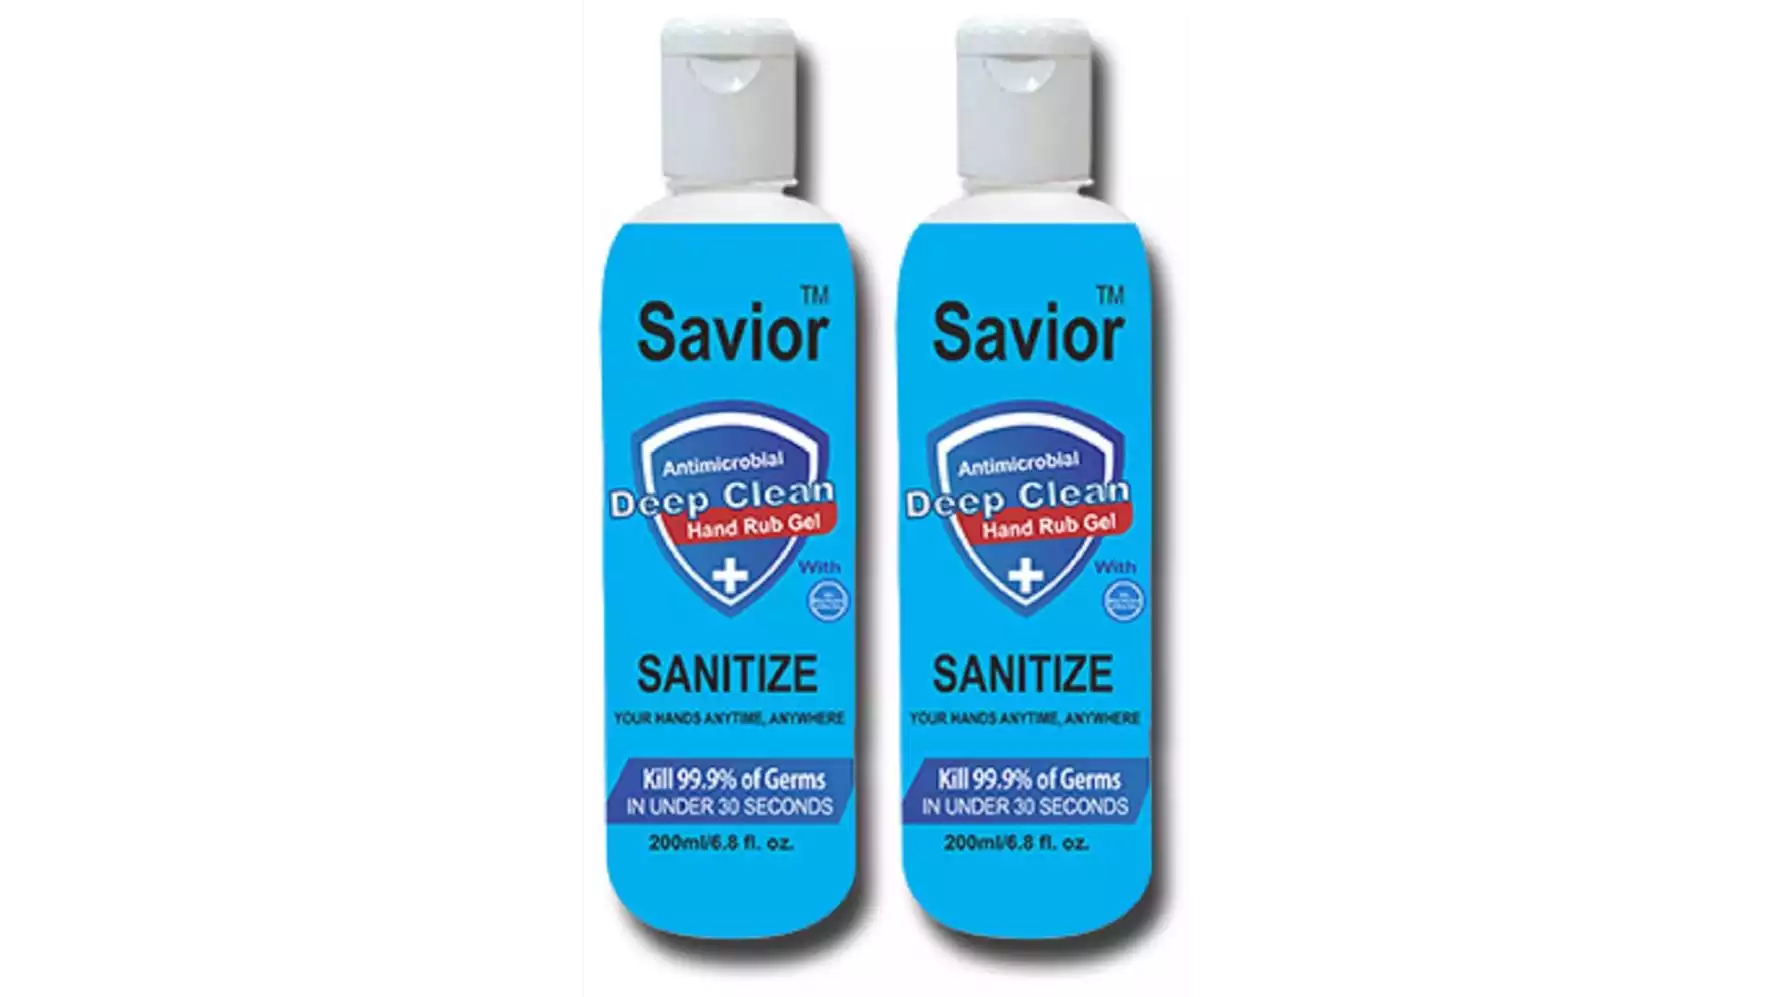 Savior Deep Clean Hand Rub Gel Sanitizer (200ml, Pack of 2)